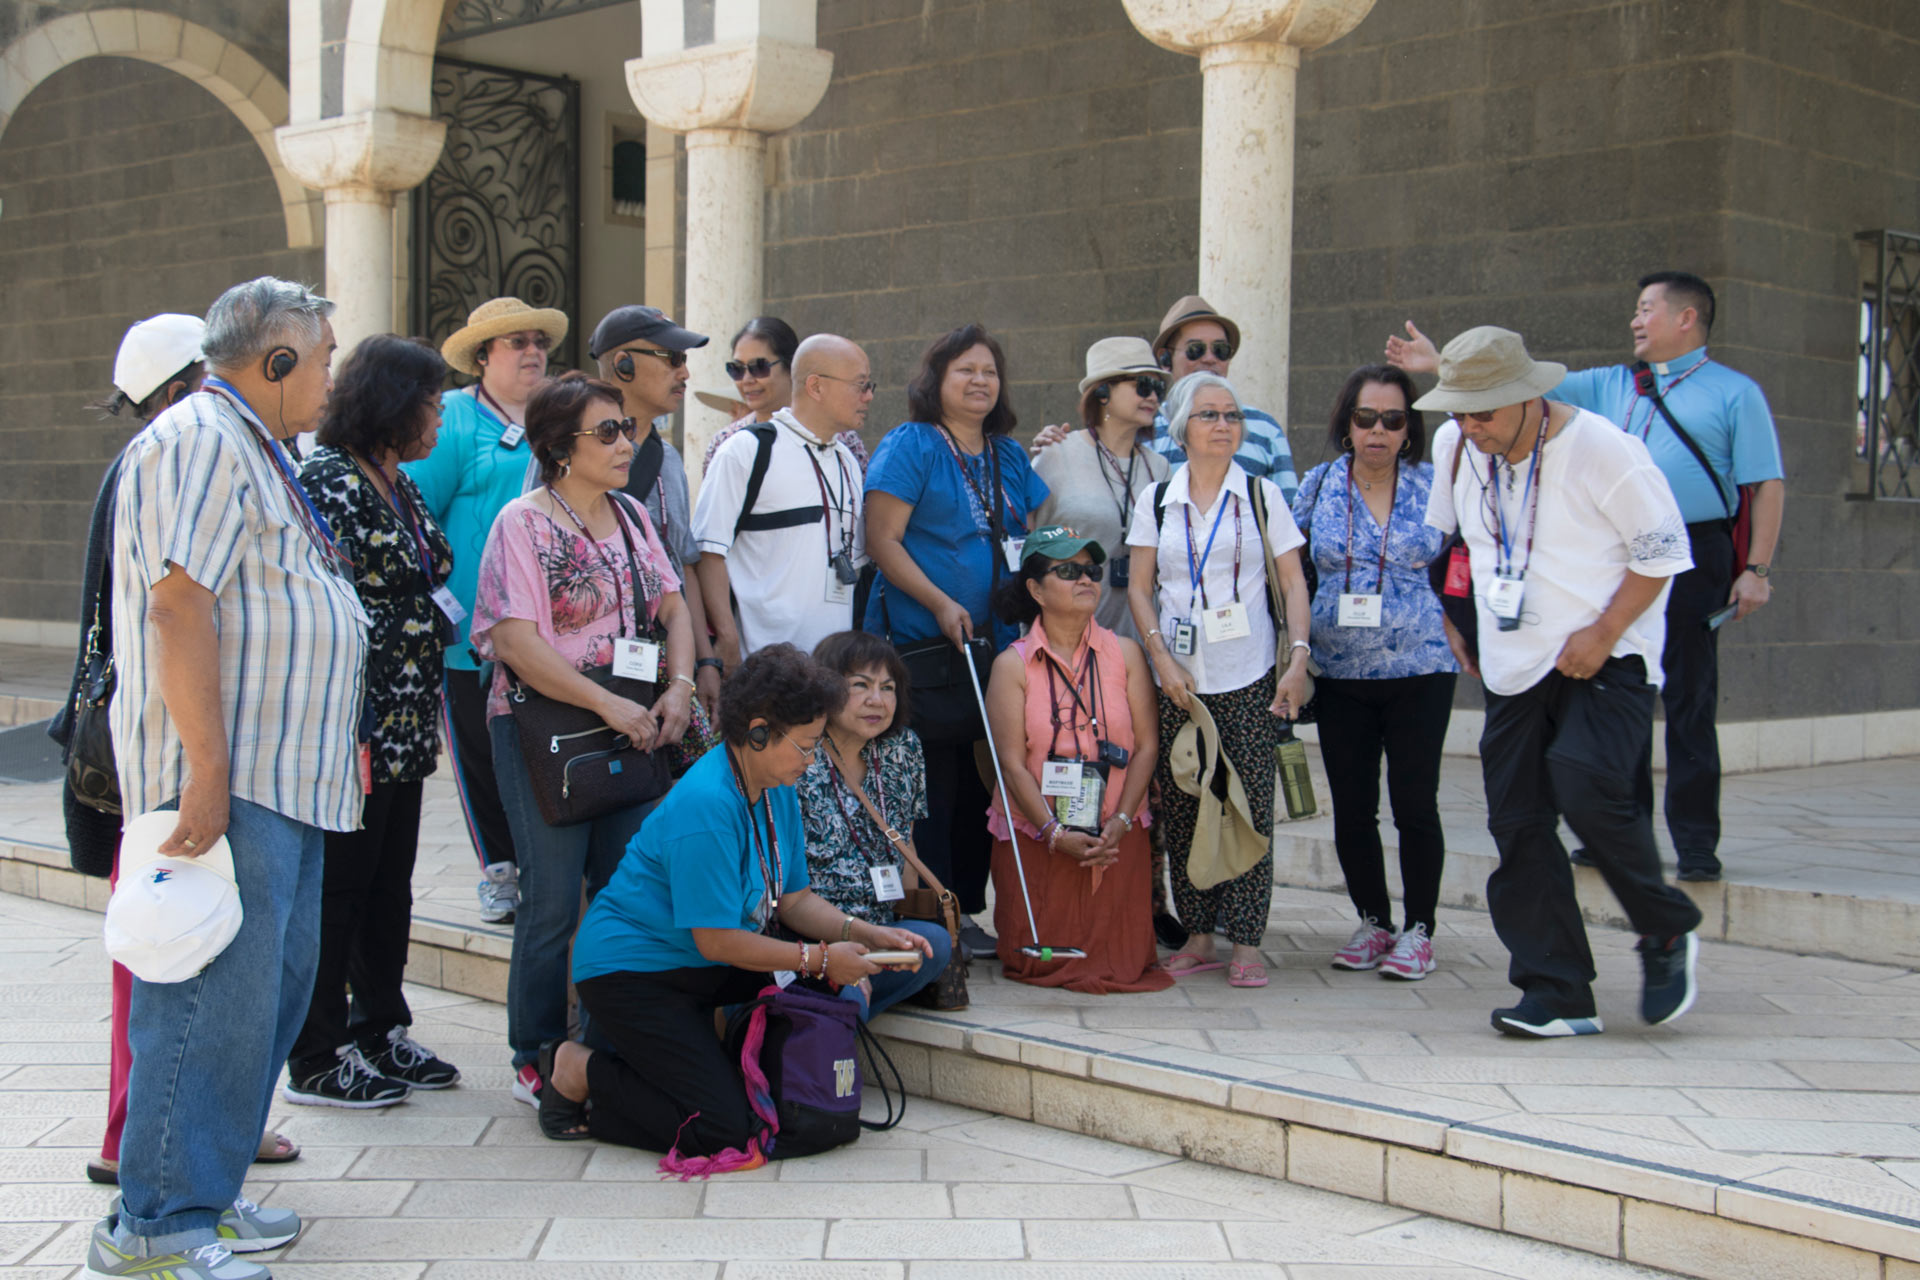 Pilgrims at the Mount of Beatitudes, Galilee, Israel